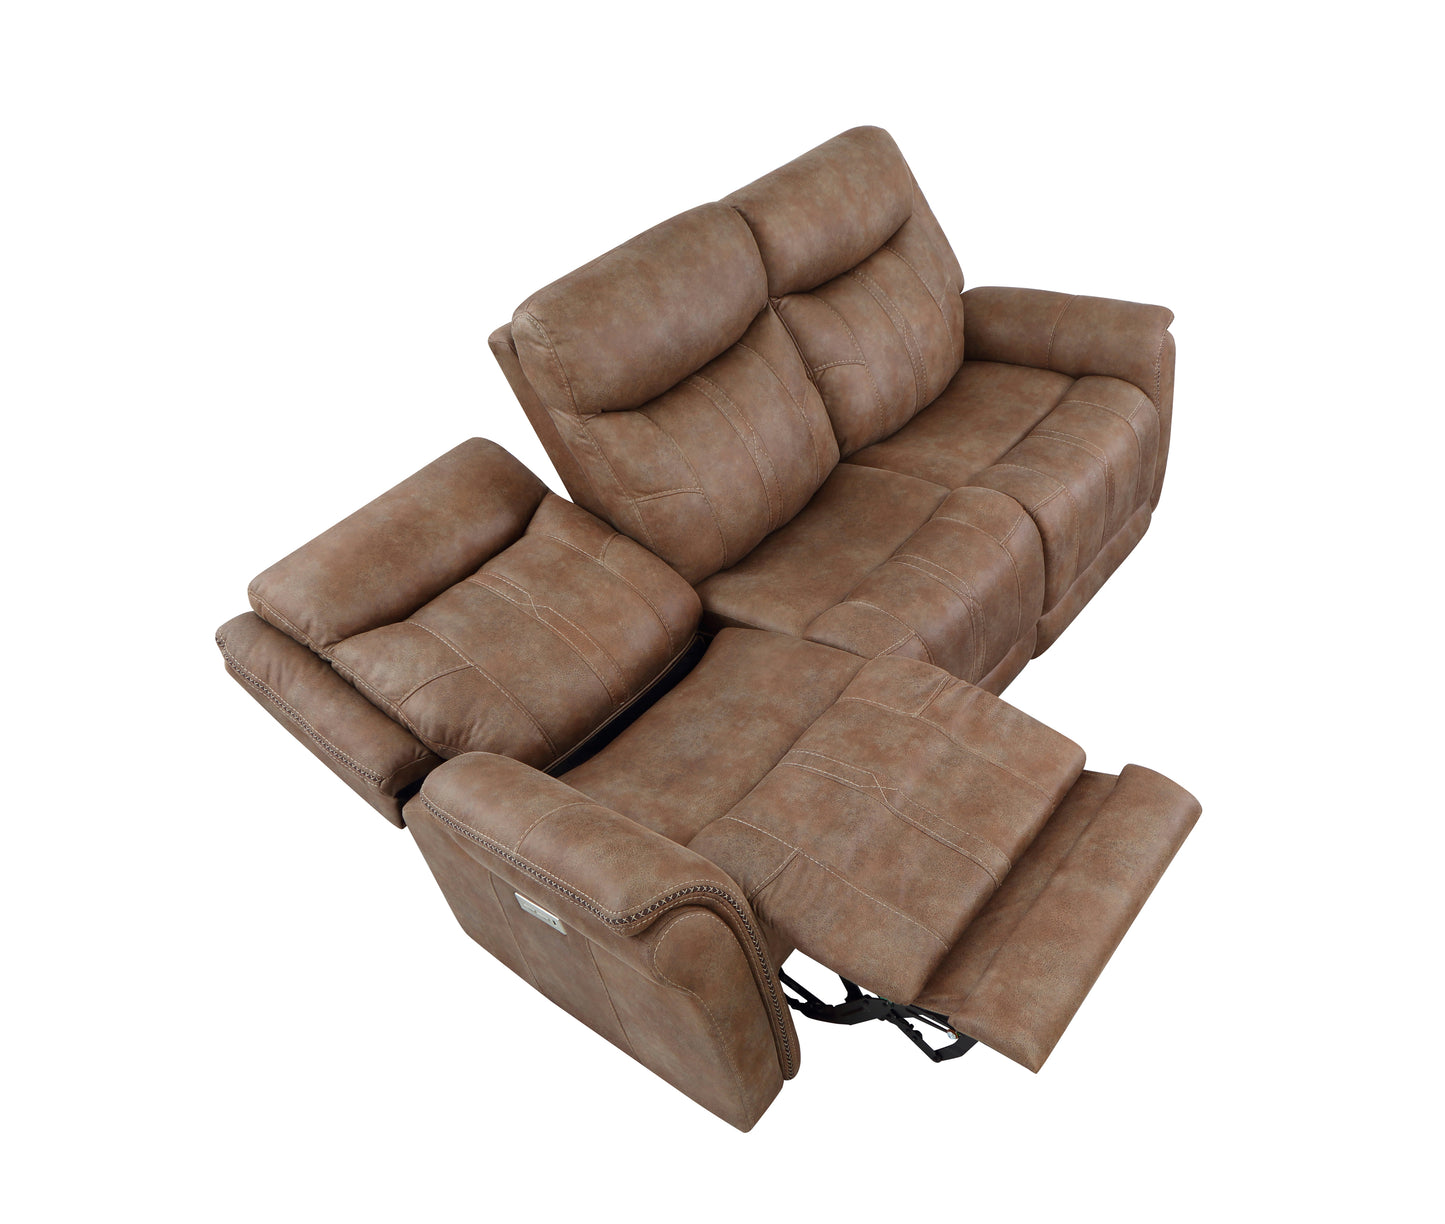 Luxurious Camel Power Sofa Recliner - Traditional Meets Modern - Power Footrest, Power Headrest, USB Charging